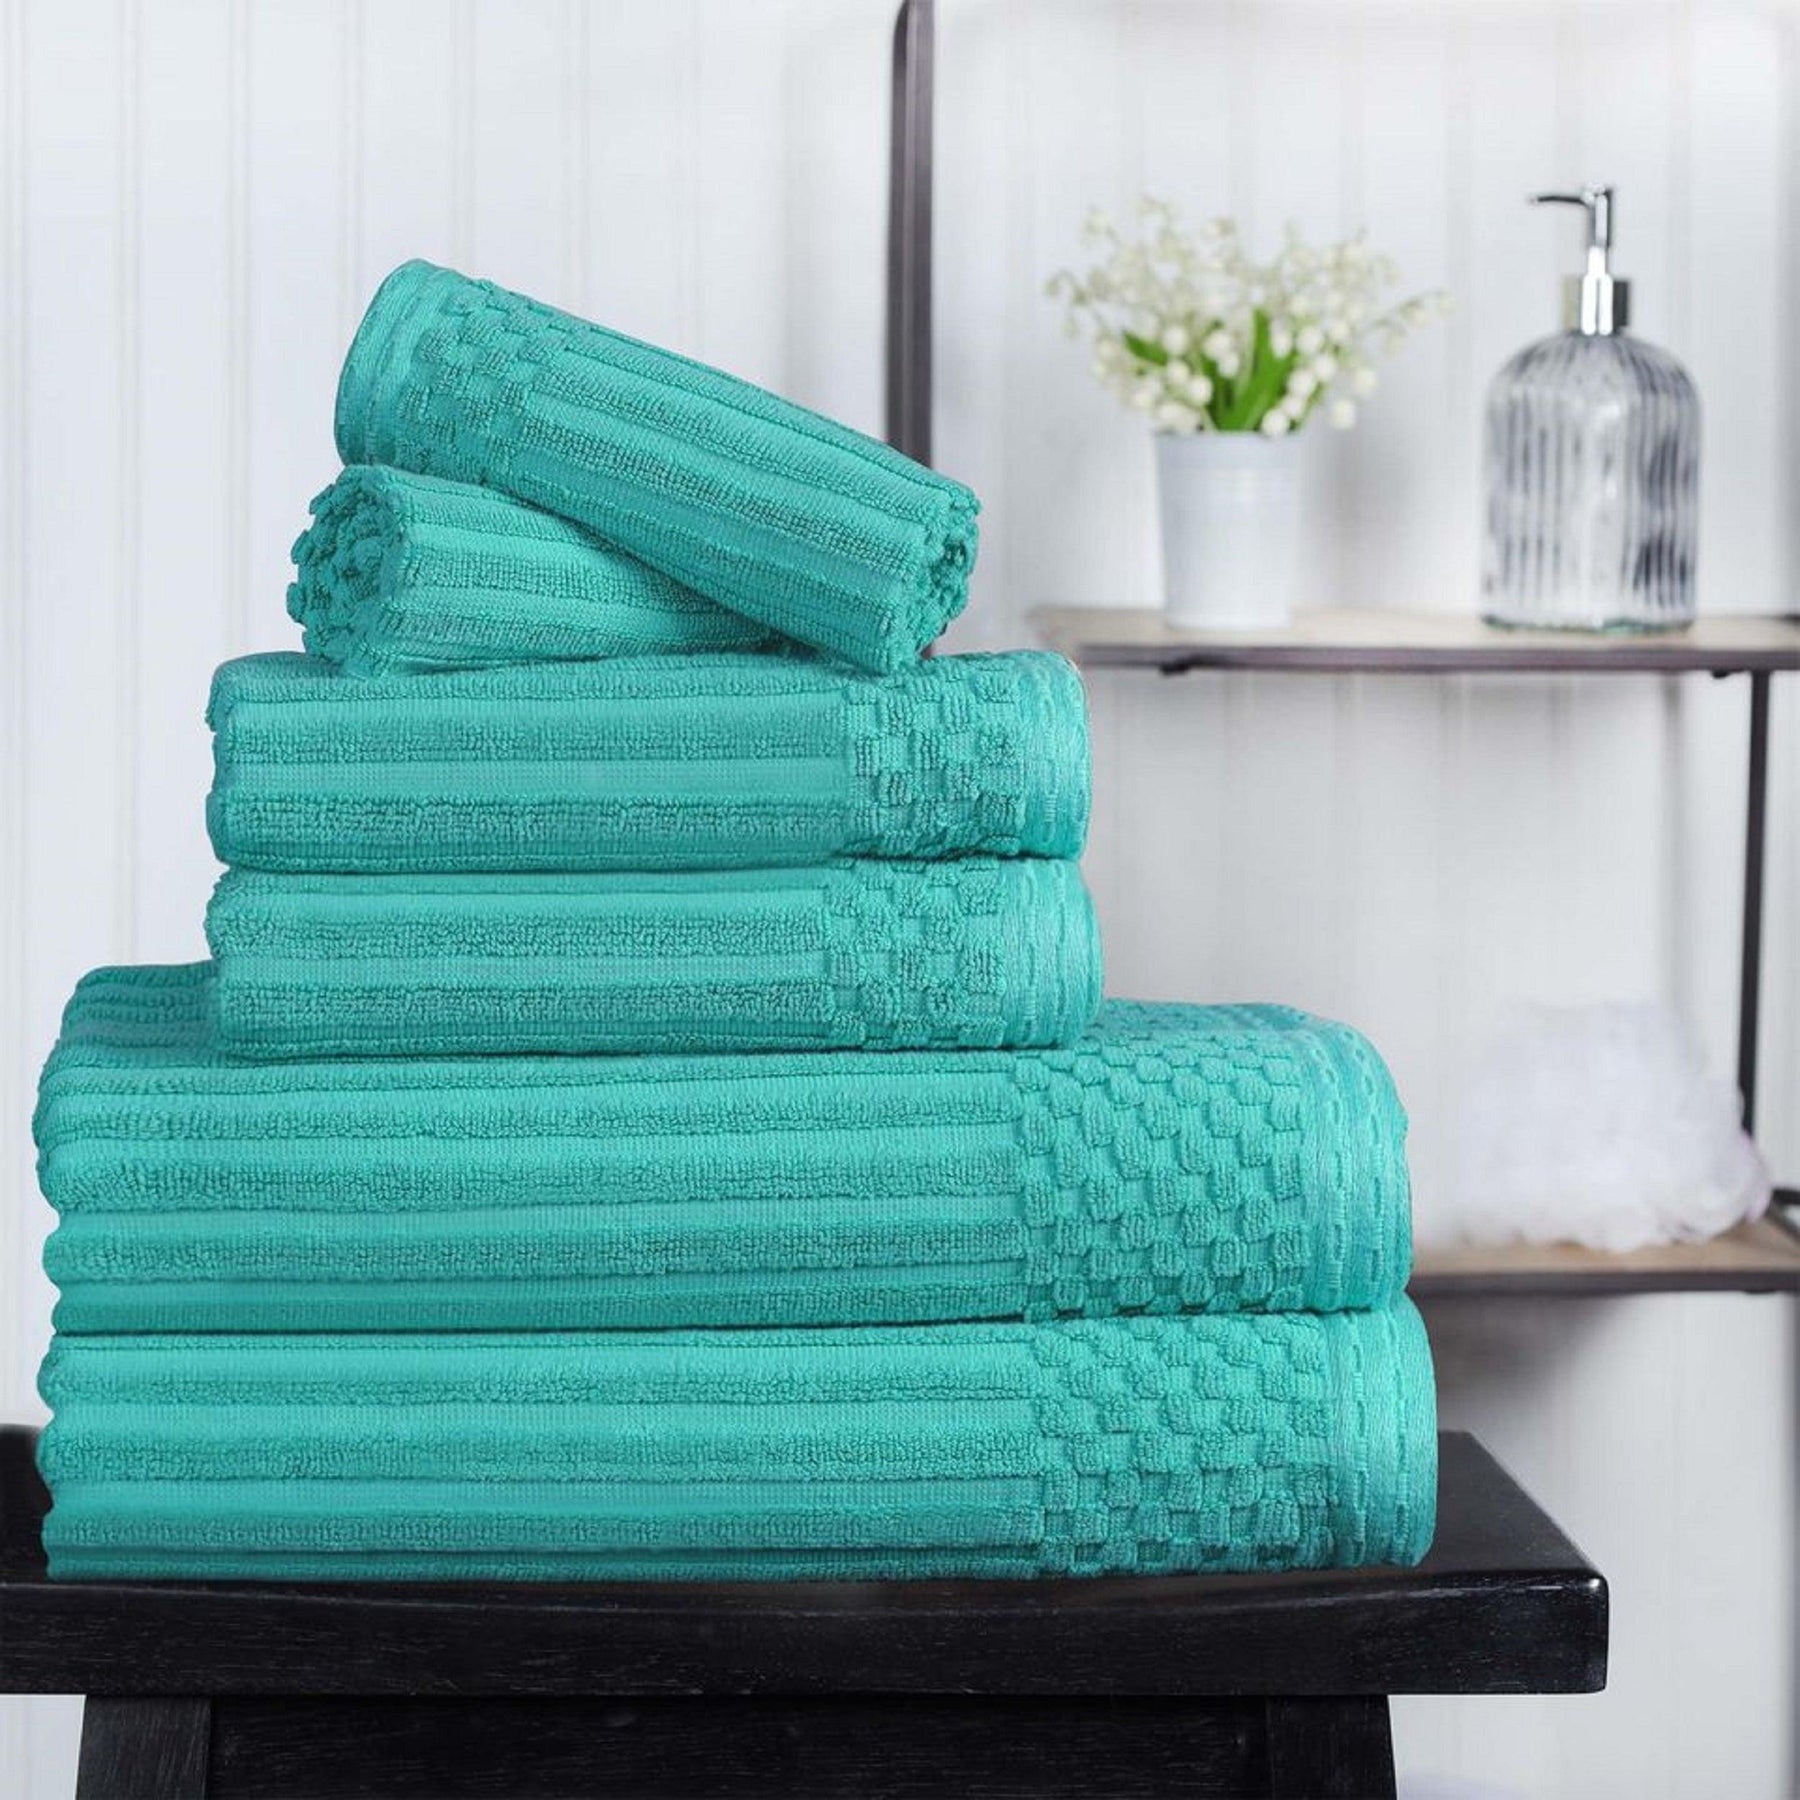 Ribbed Textured Cotton Medium Weight 6 Piece Towel Set - Turquoise